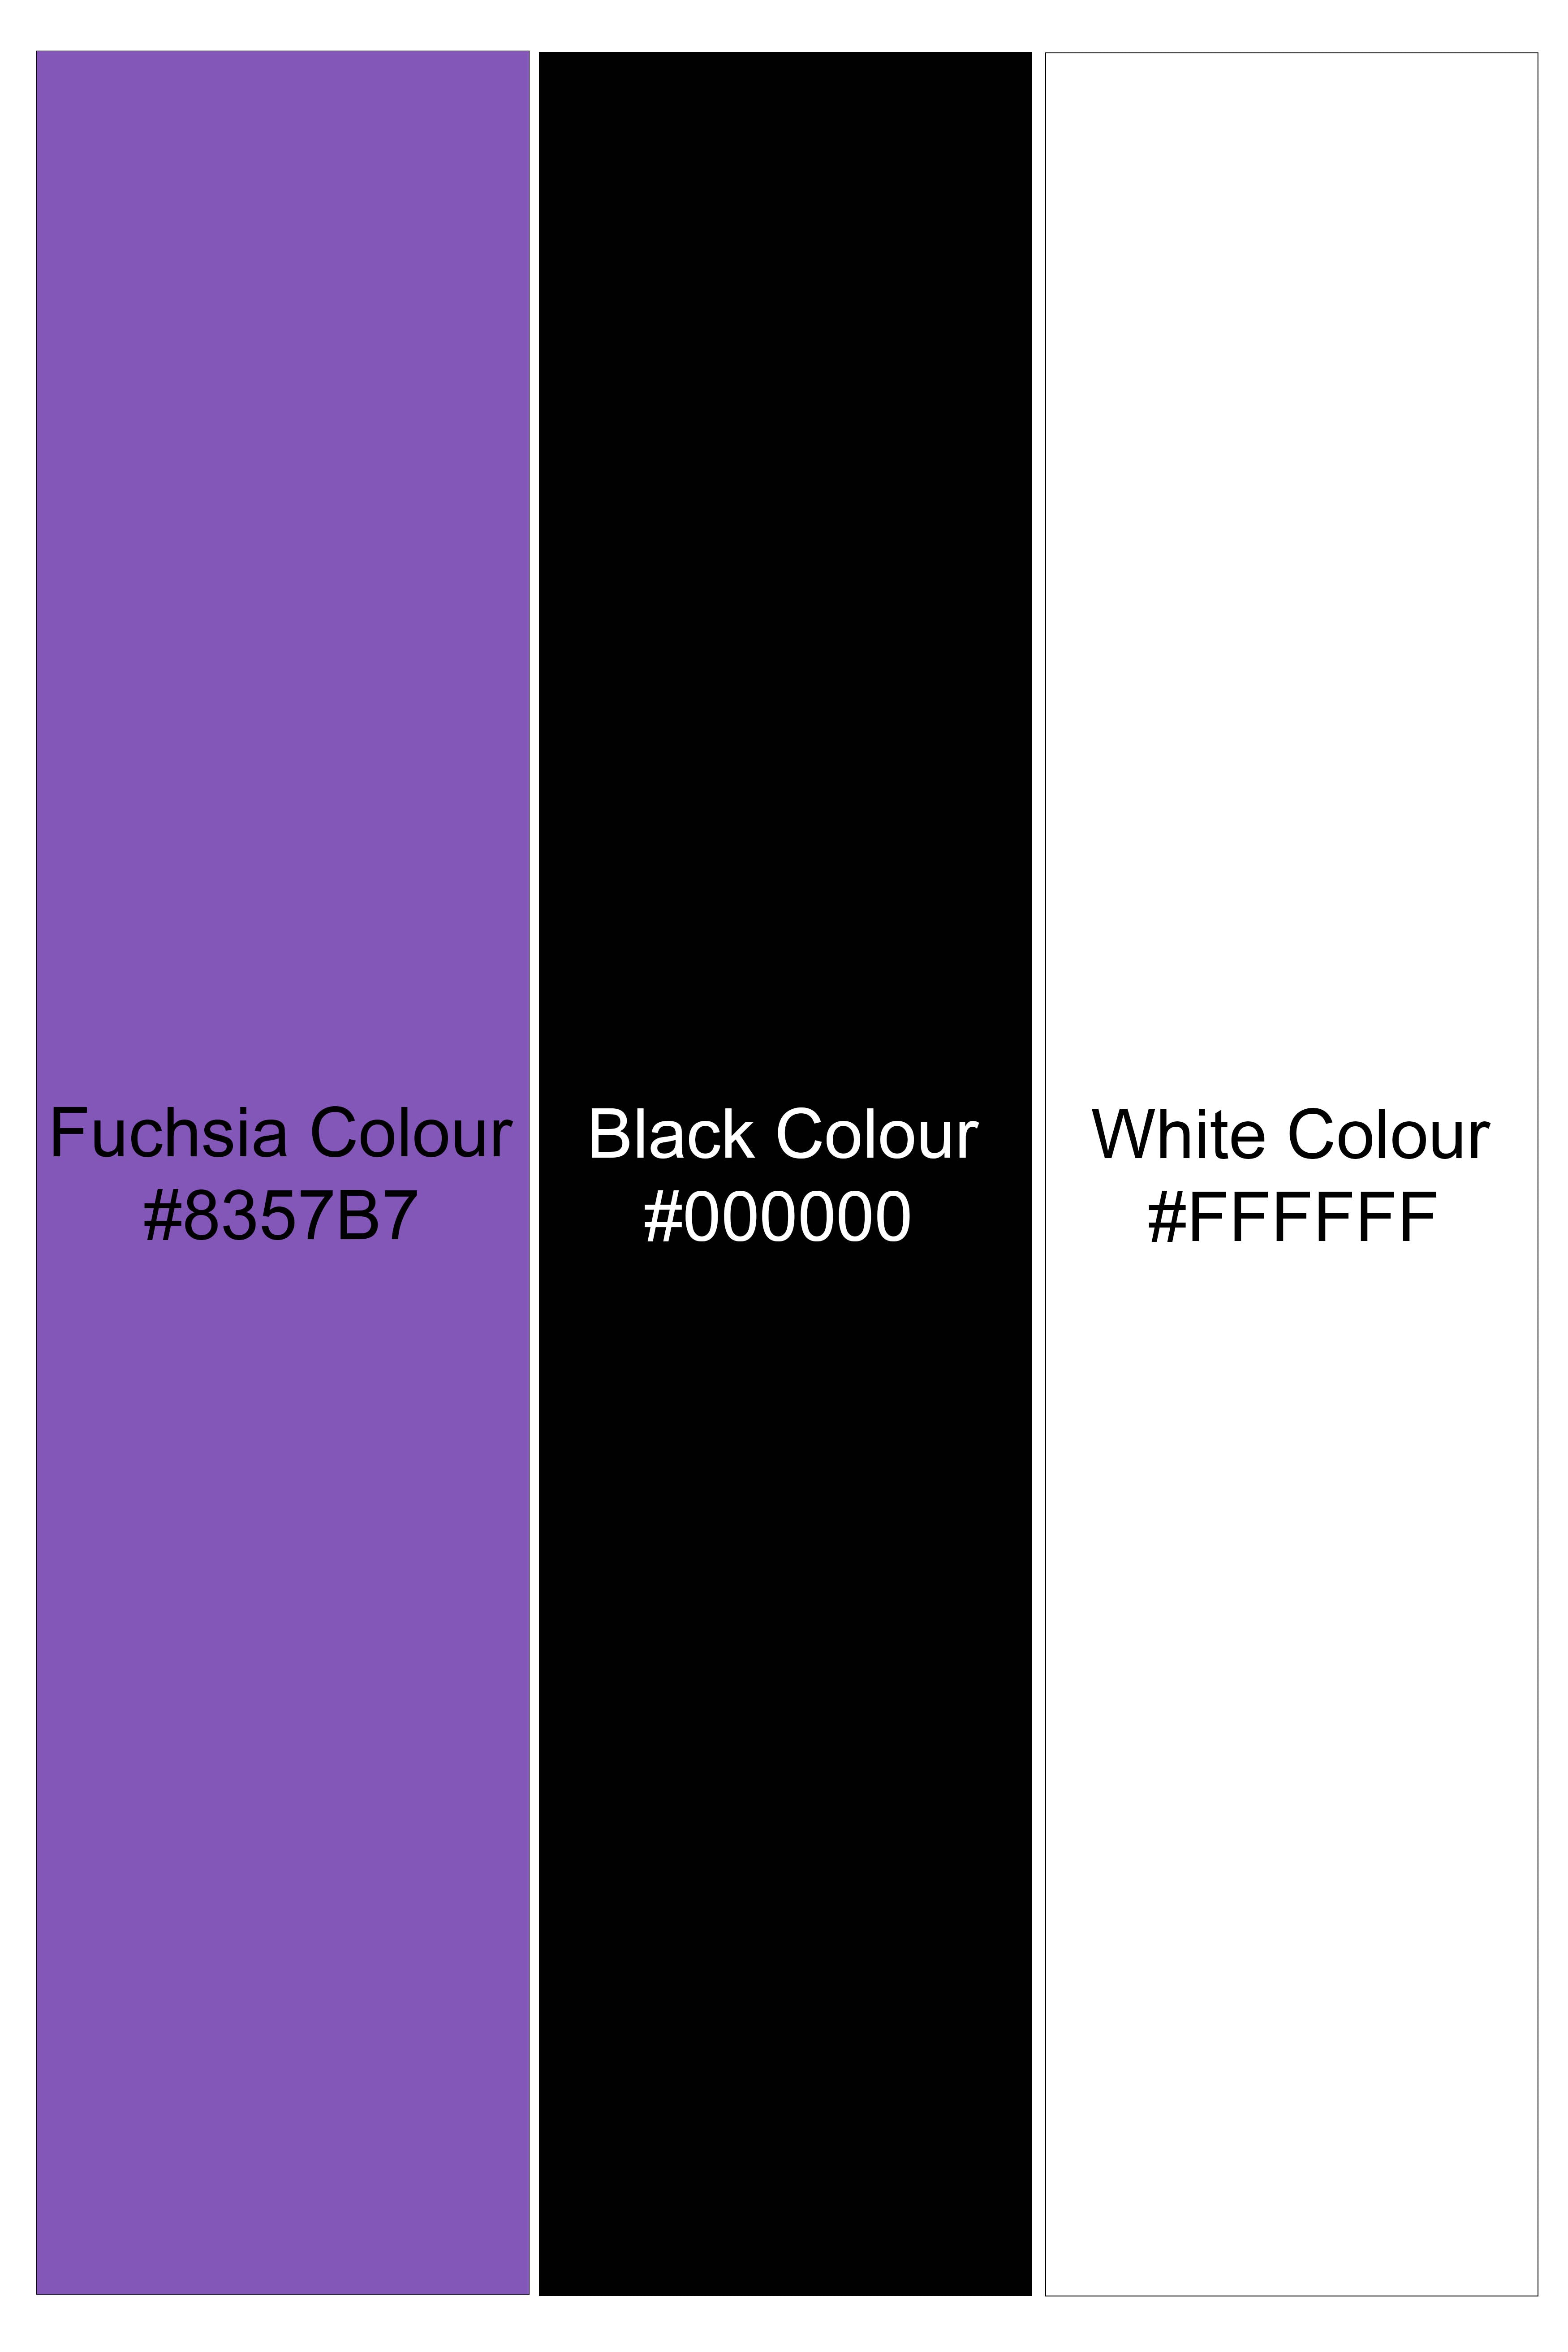 Fuchsia Purple Leaves Hand Stitched Embroidered Royal Oxford Designer Shirt 6292-BD-E208-38, 6292-BD-E208-H-38, 6292-BD-E208-39, 6292-BD-E208-H-39, 6292-BD-E208-40, 6292-BD-E208-H-40, 6292-BD-E208-42, 6292-BD-E208-H-42, 6292-BD-E208-44, 6292-BD-E208-H-44, 6292-BD-E208-46, 6292-BD-E208-H-46, 6292-BD-E208-48, 6292-BD-E208-H-48, 6292-BD-E208-50, 6292-BD-E208-H-50, 6292-BD-E208-52, 6292-BD-E208-H-52